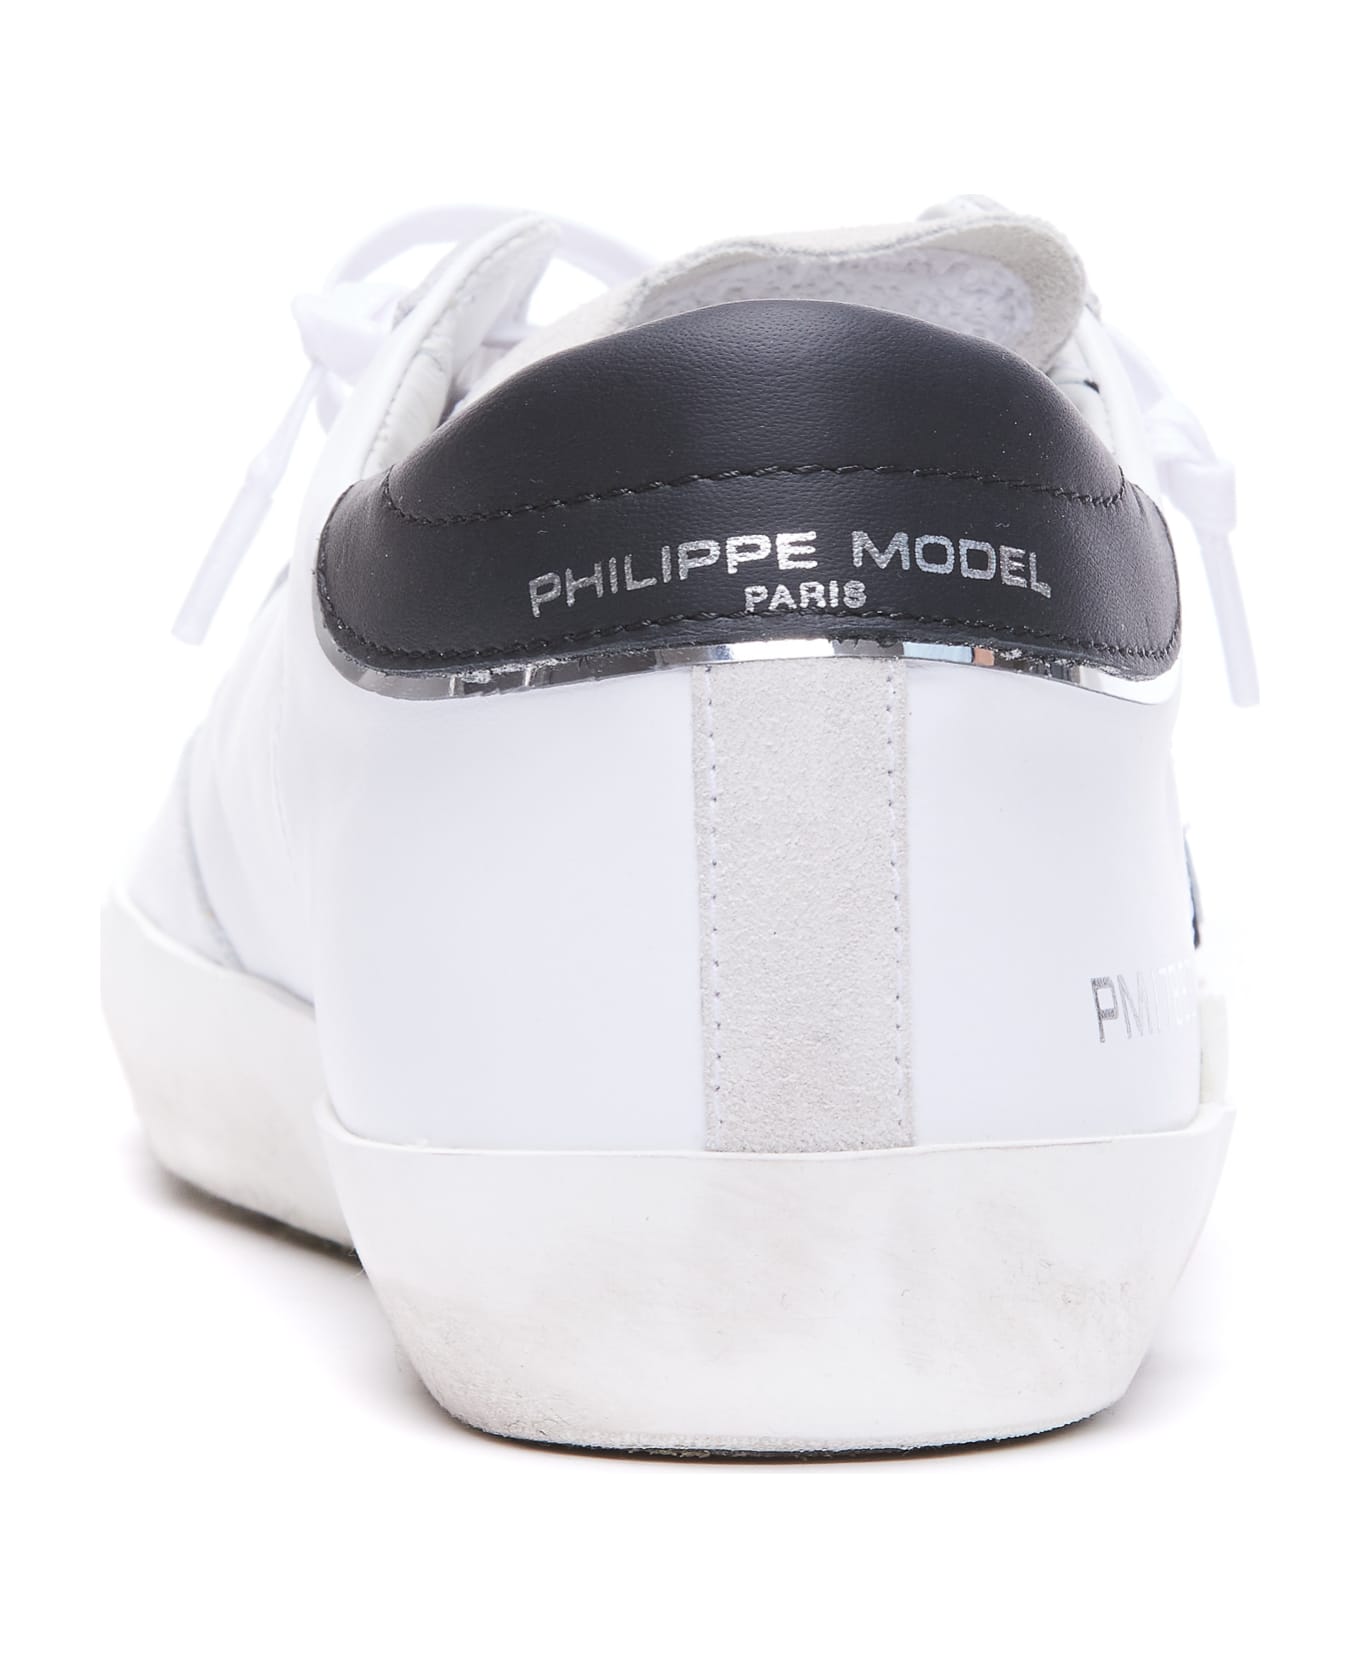 Philippe Model Prsx Low Sneakers - Bianco / Nero